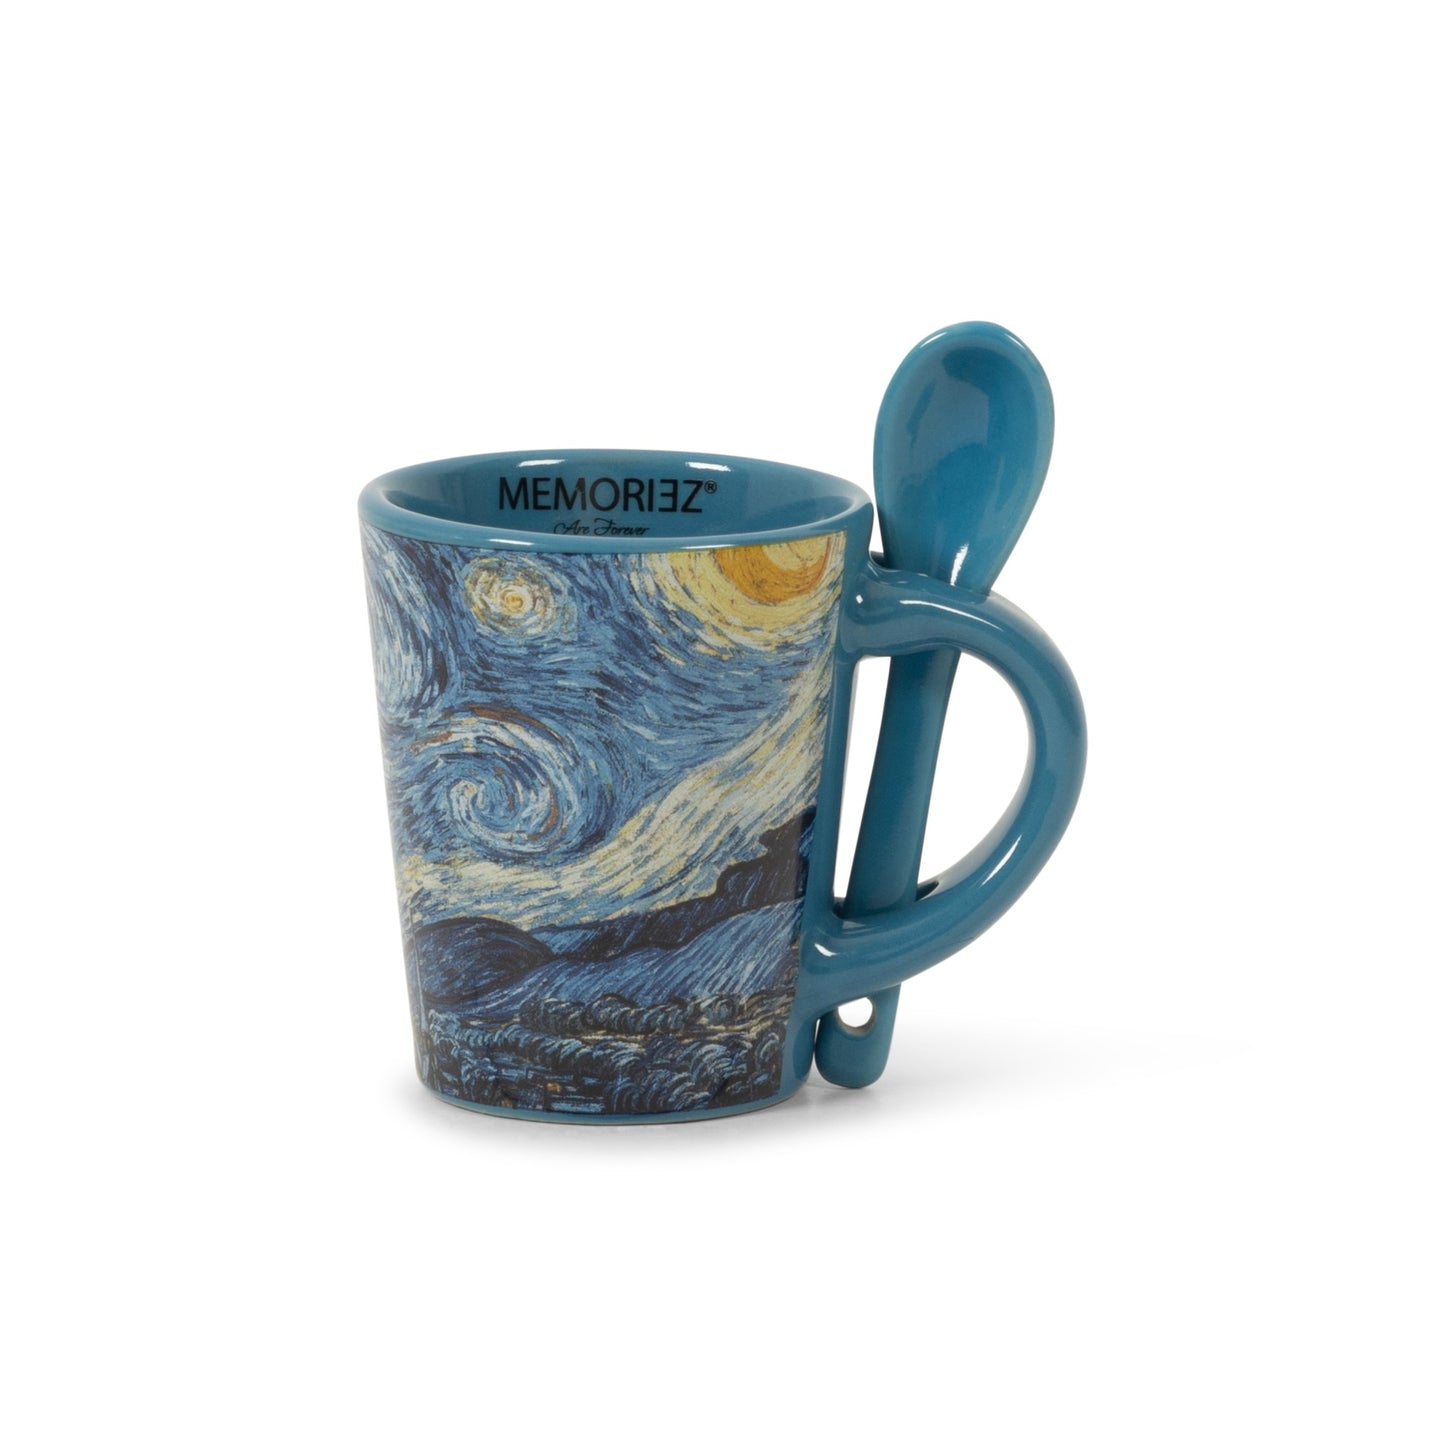 Espresso Mug with spoon - Starry night - van Gogh